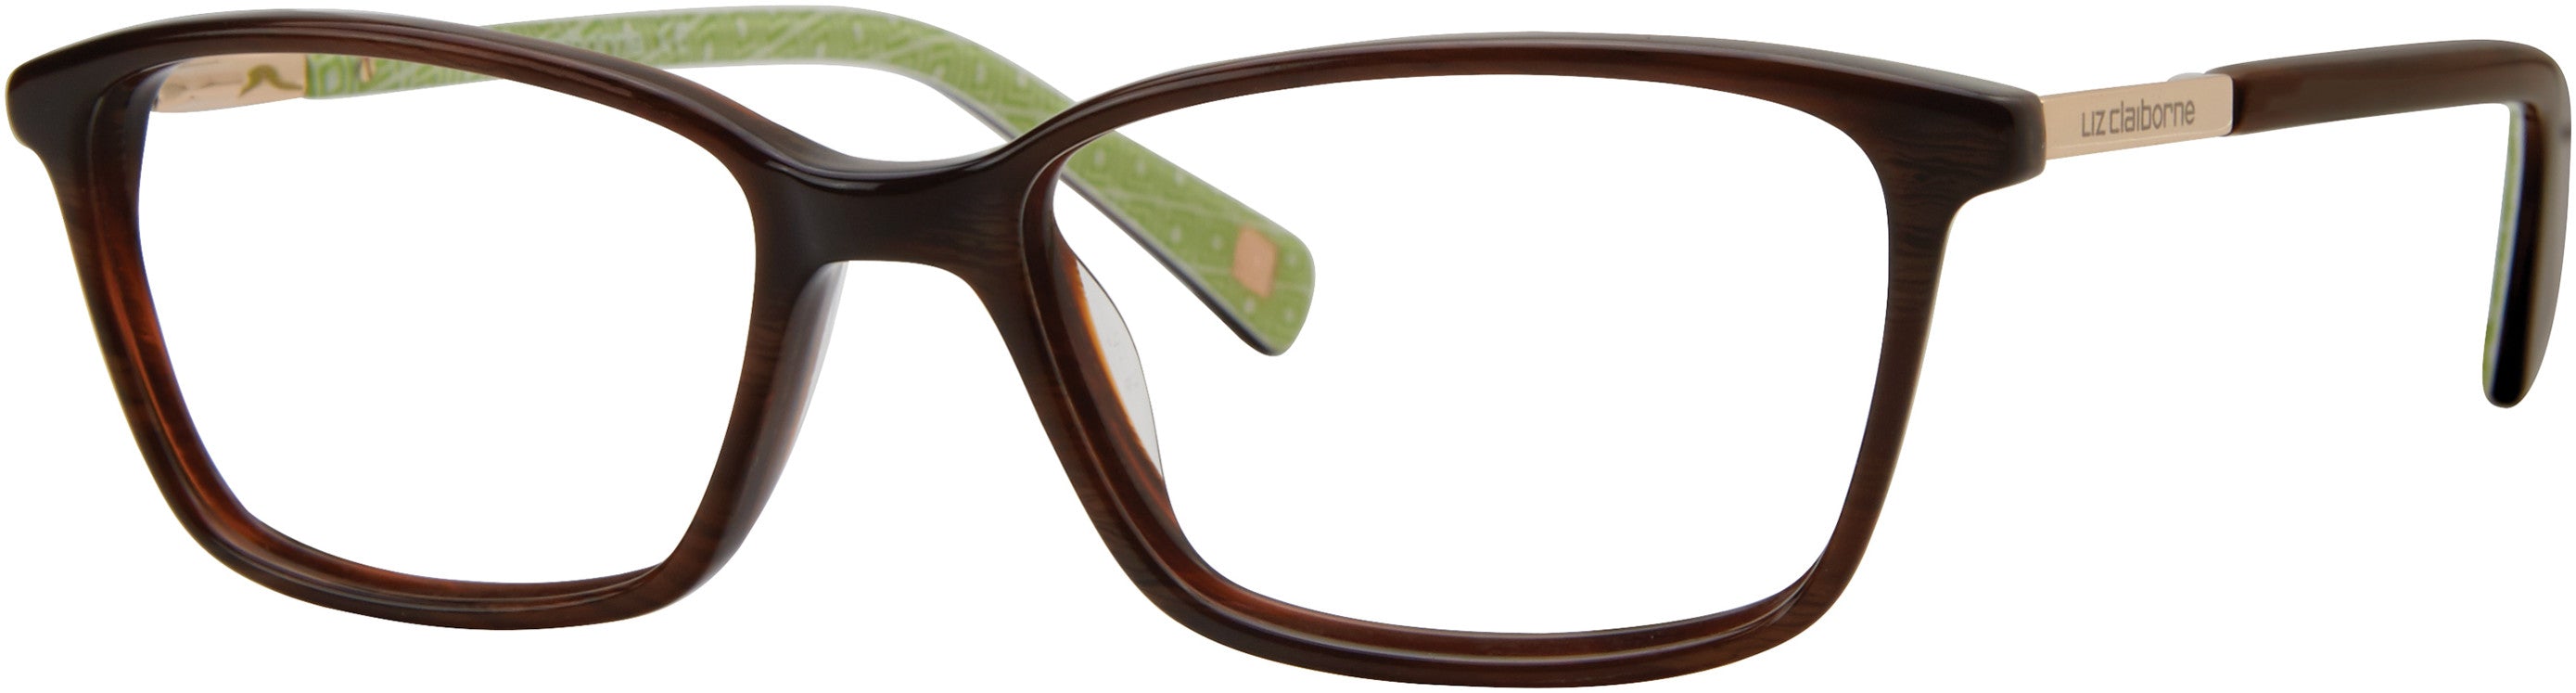  Liz Claiborne 448 Rectangular Eyeglasses 0WR9-0WR9  Brown Havana (00 Demo Lens)